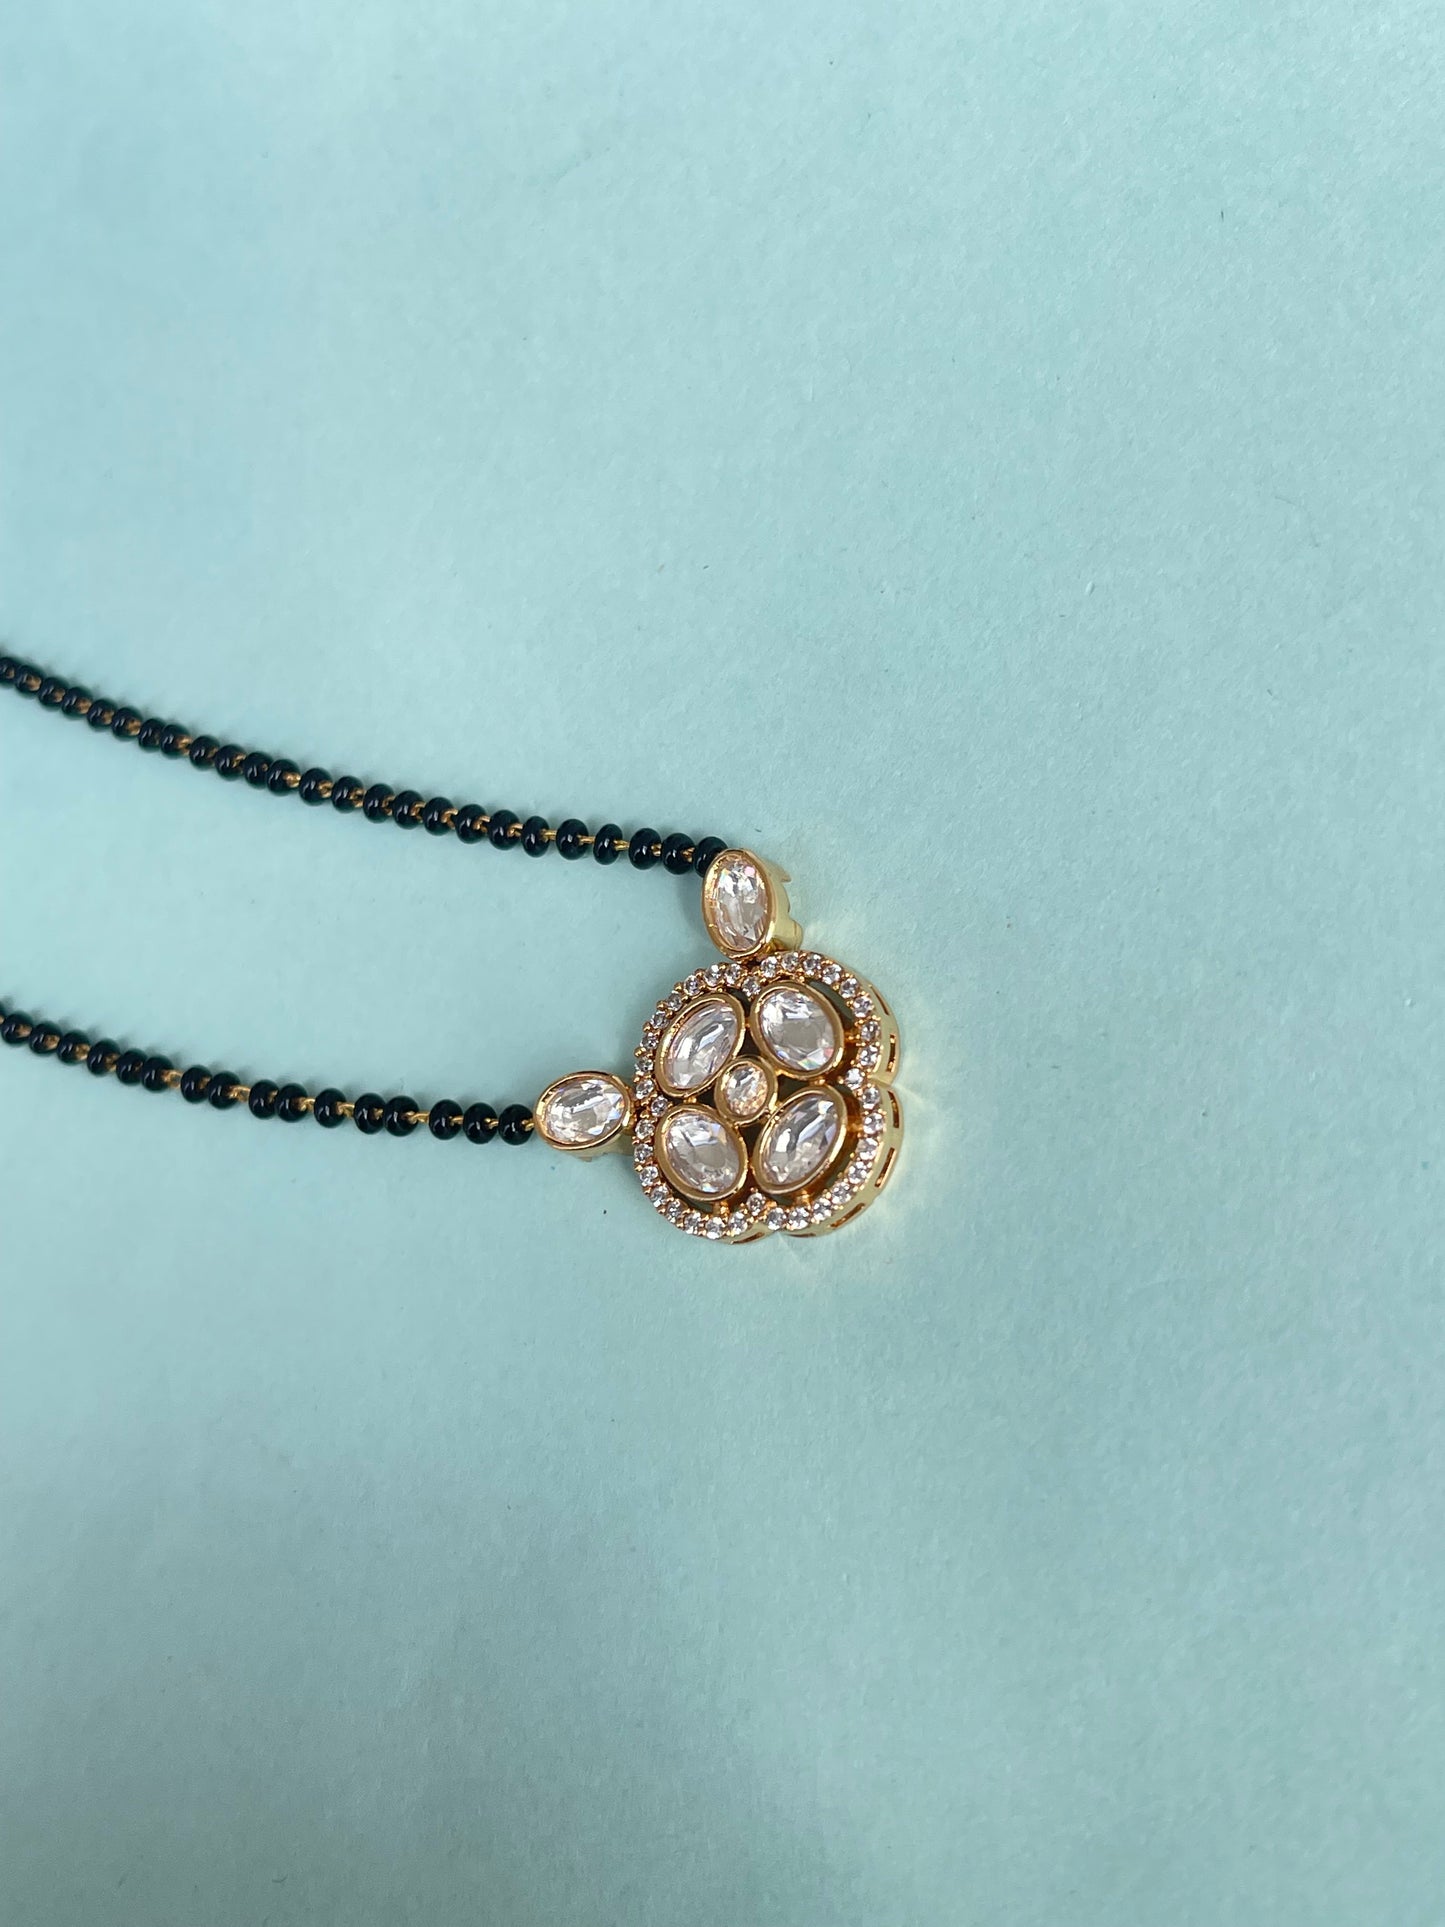 Kundan pendant and earrings single line 18 inches blackbeads